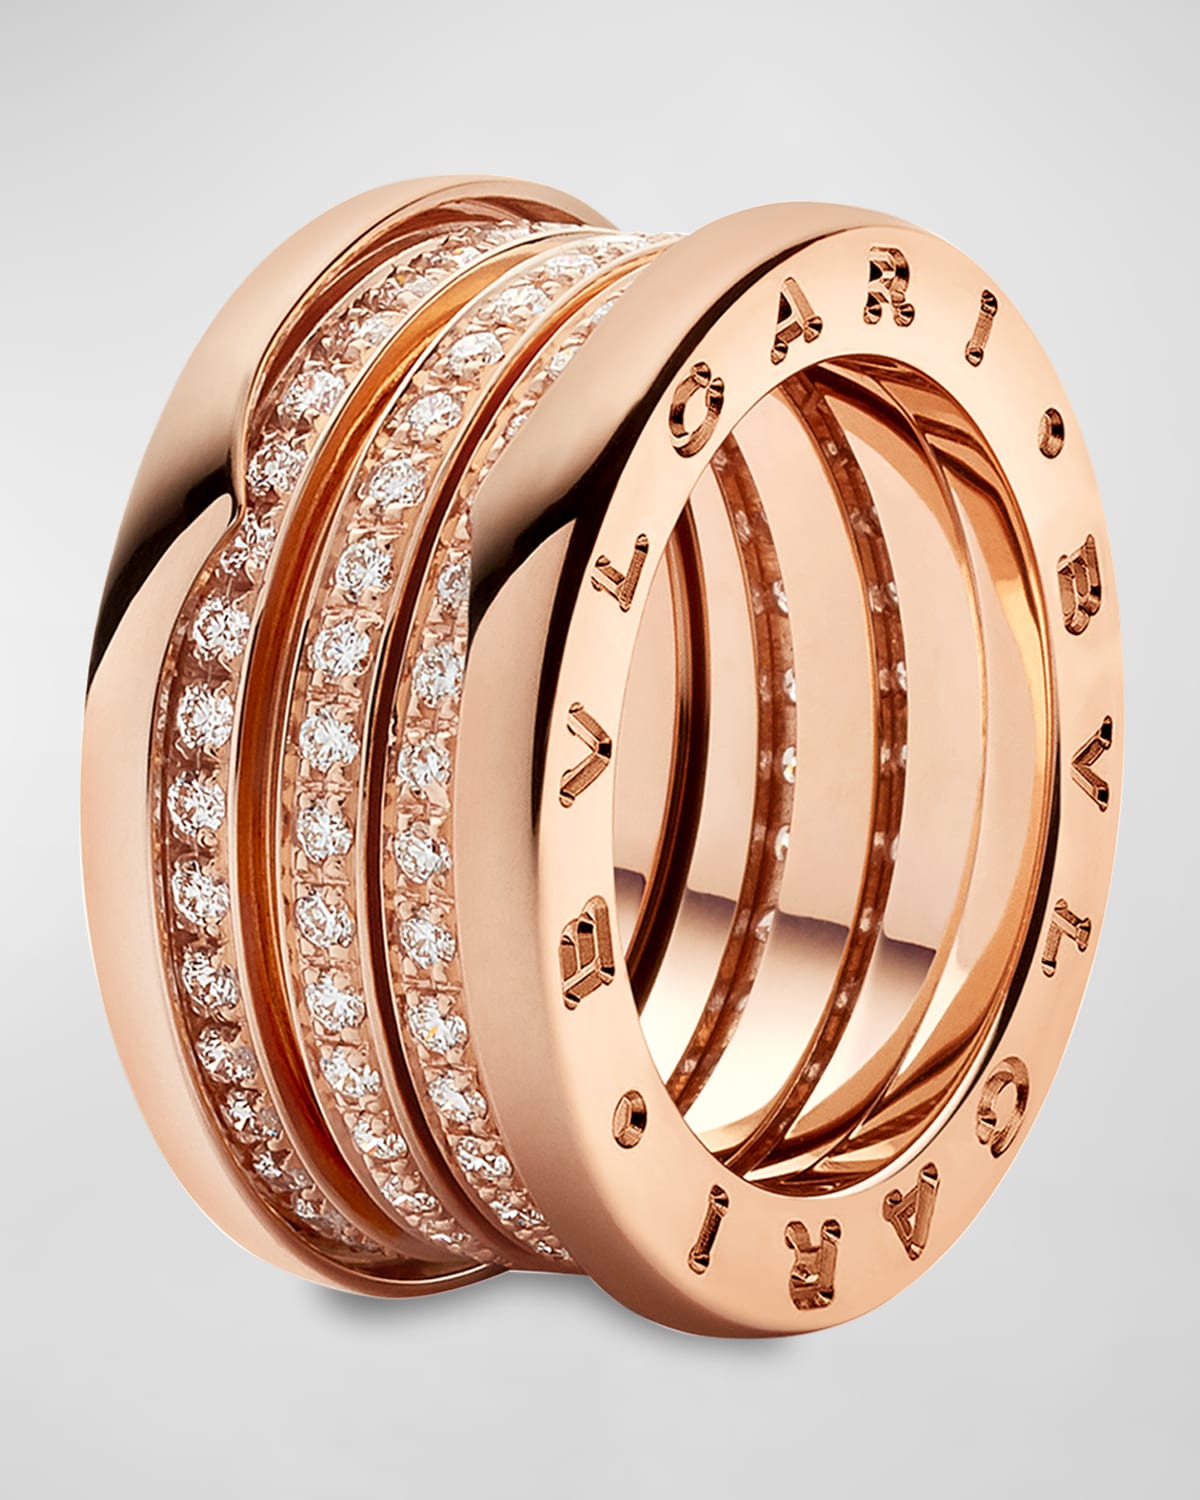 18K Rose Gold Three Row Diamond Ring, Size 56